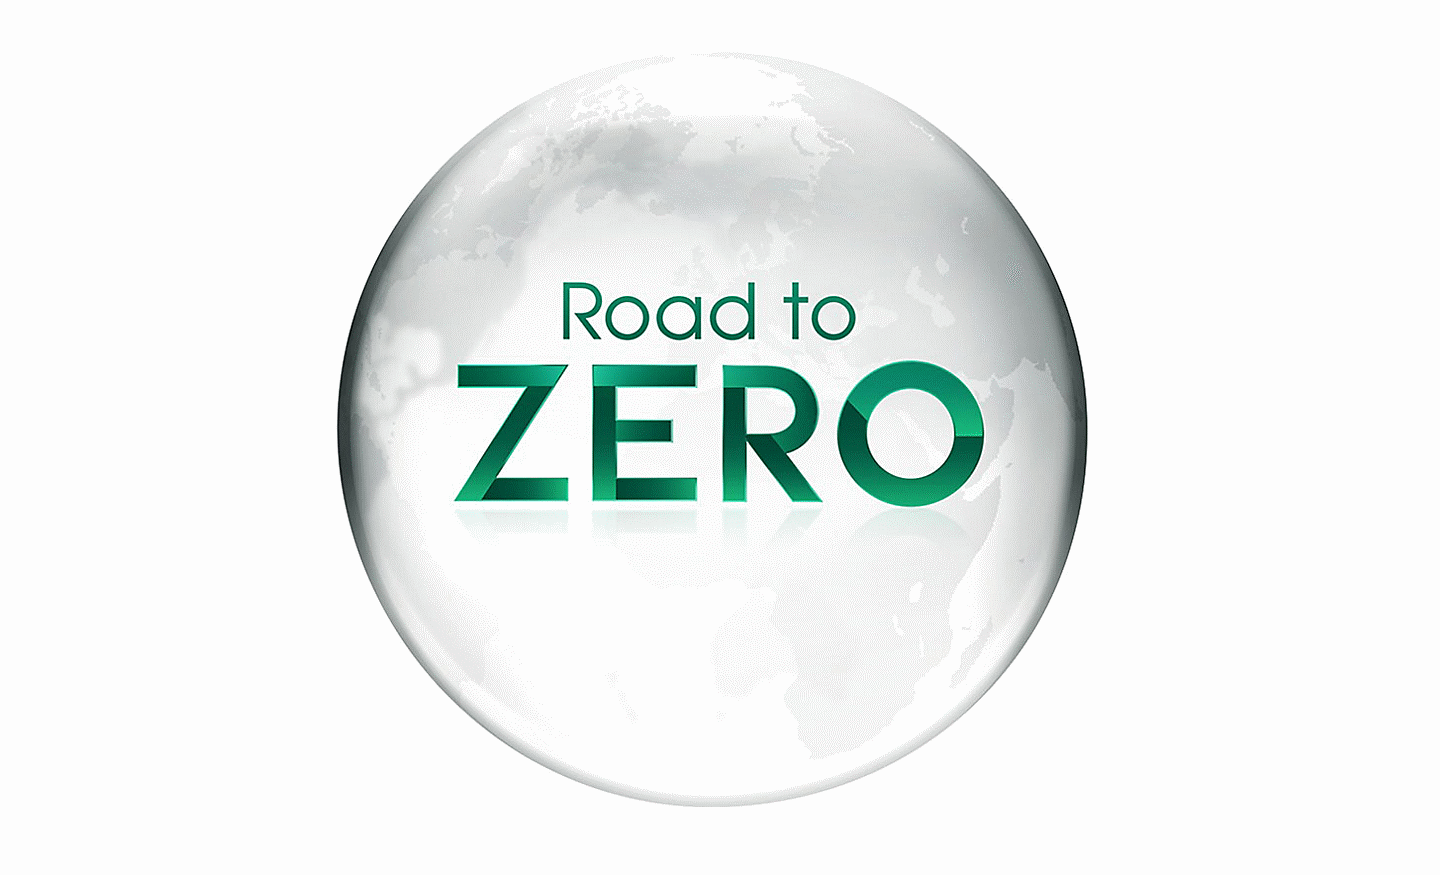 Image of the Road to ZERO logo